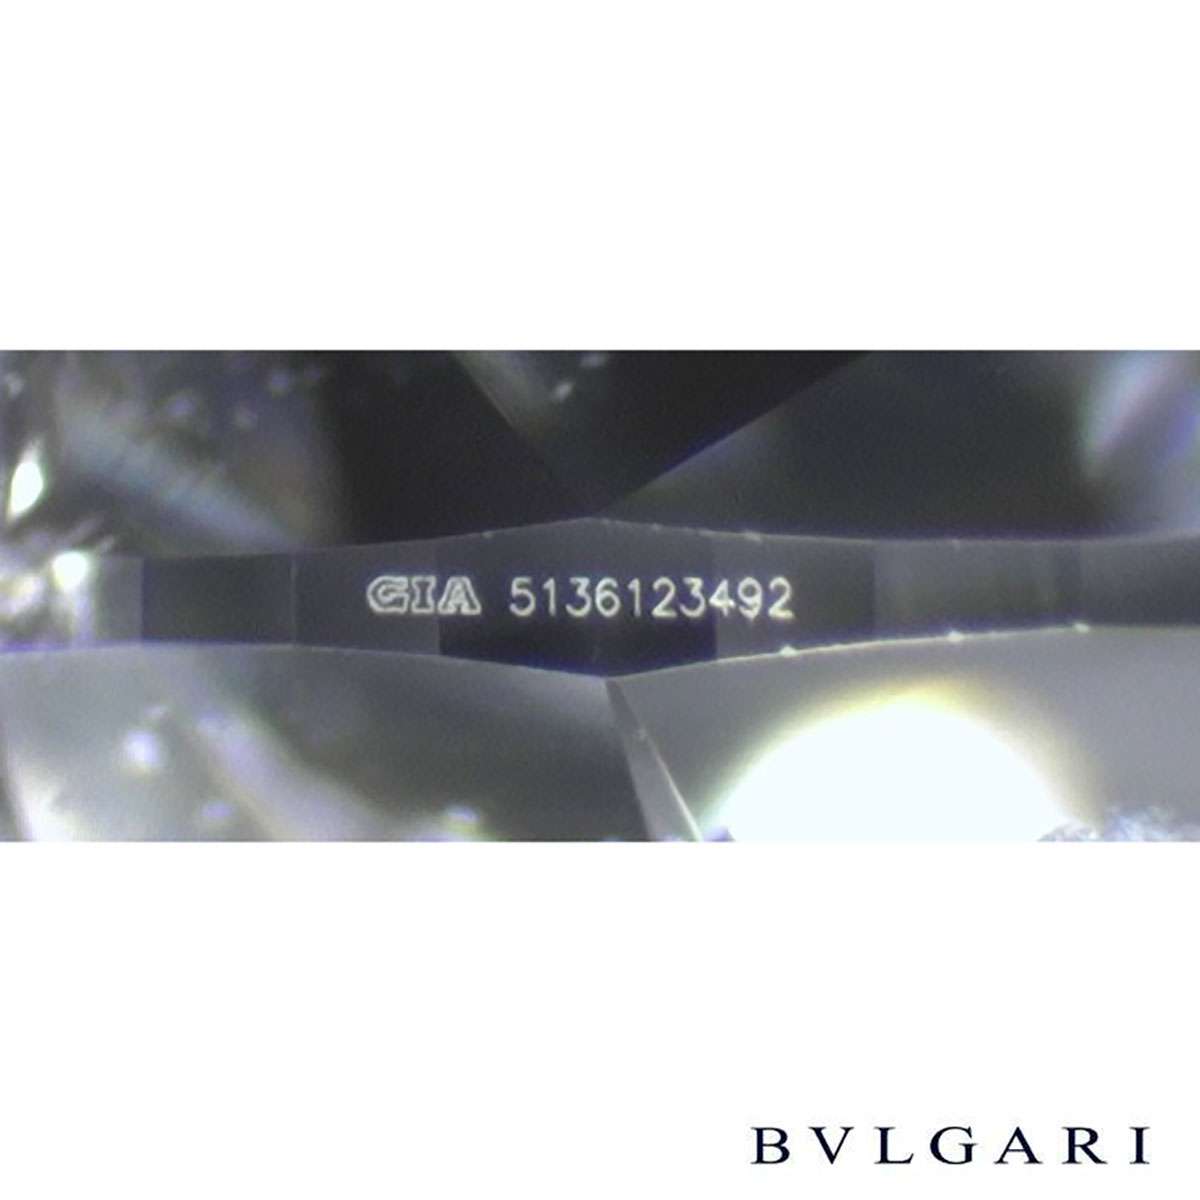 Bvlgari Platinum Diamond Dedicata A Venezia Ring  D/VS2 | Rich  Diamonds